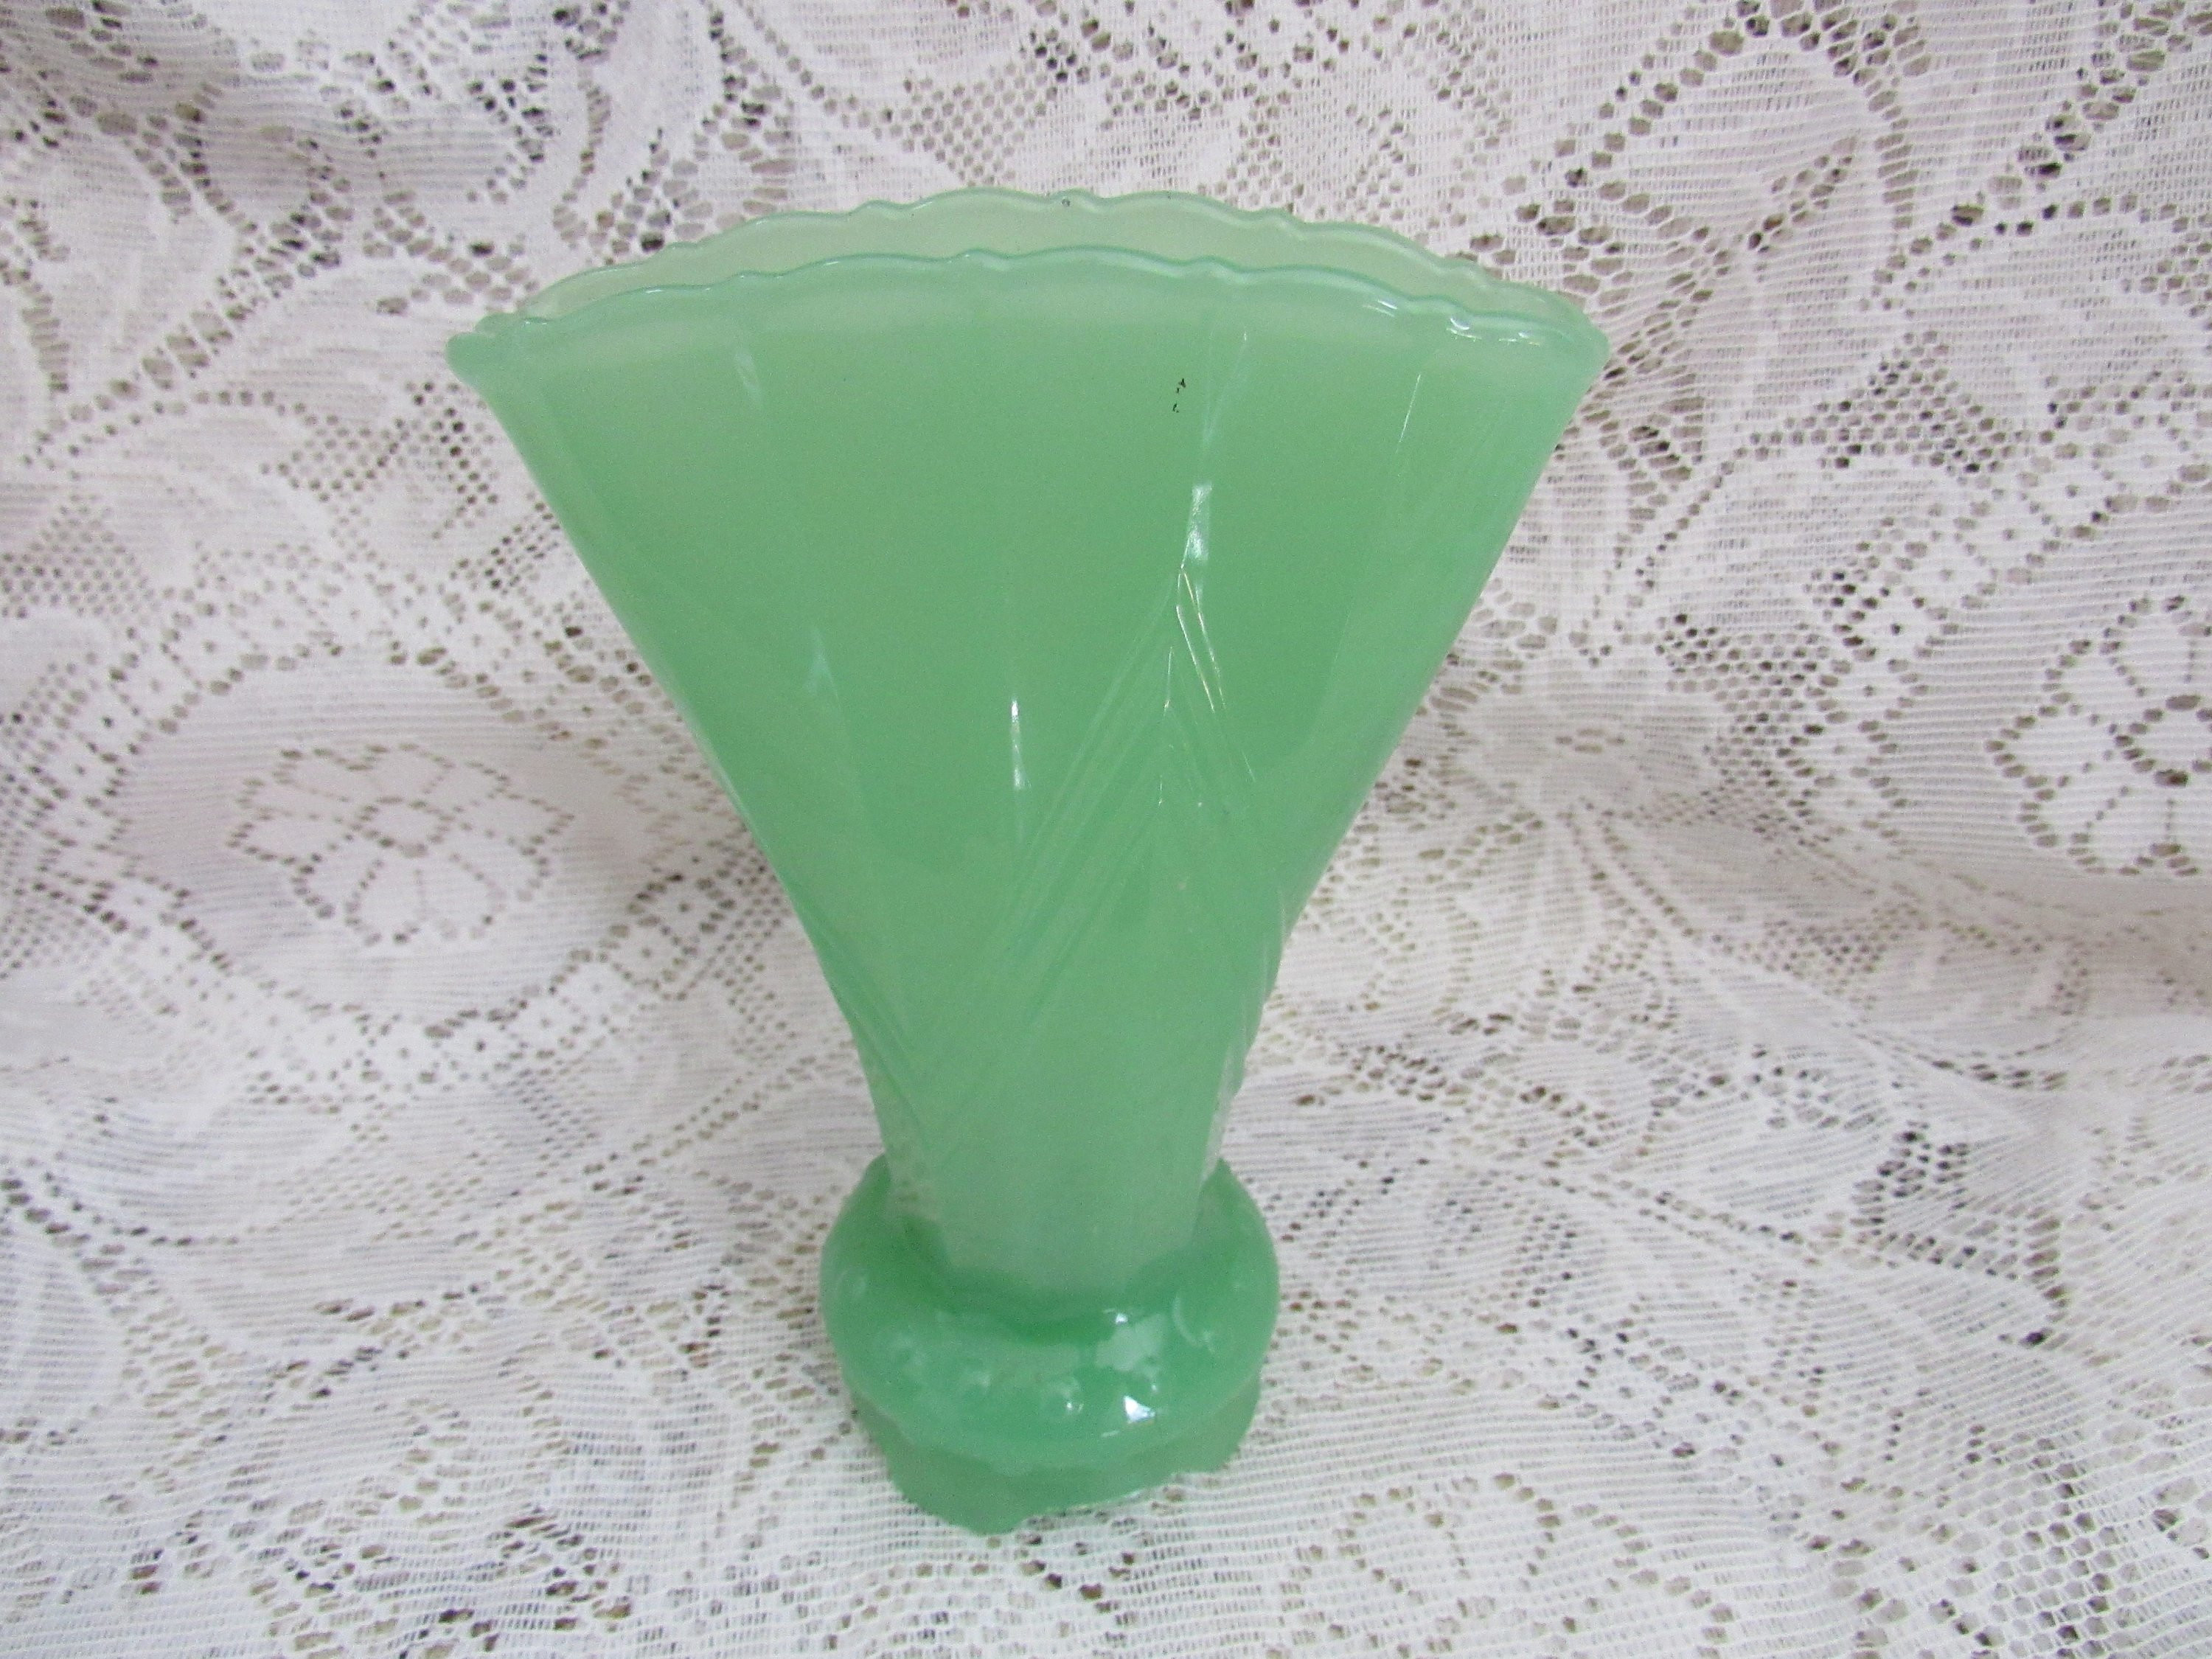 15 Fantastic Small Glass Bud Vases 2024 free download small glass bud vases of fenton jadite chevron fan bud vase etsy for dc29fc294c28ezoom